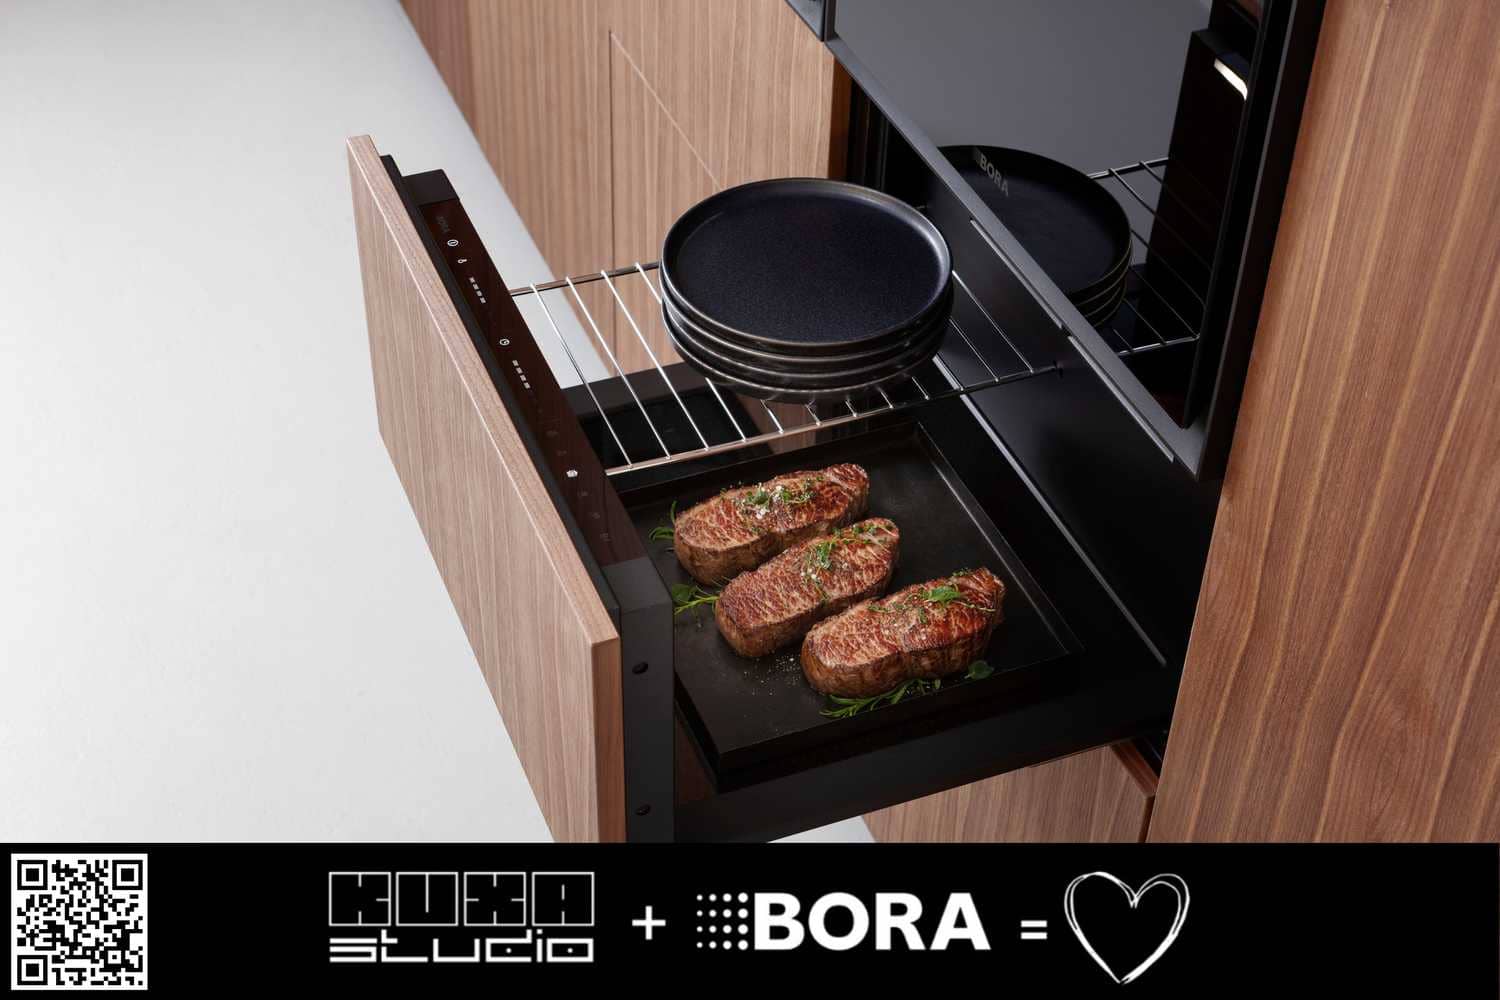 Cuptorul incorporabil de la BORA - o multime de retete incluse, setari multiple pentru preparate excelente, gatire fara miros, auto-curatare - BORA X BO